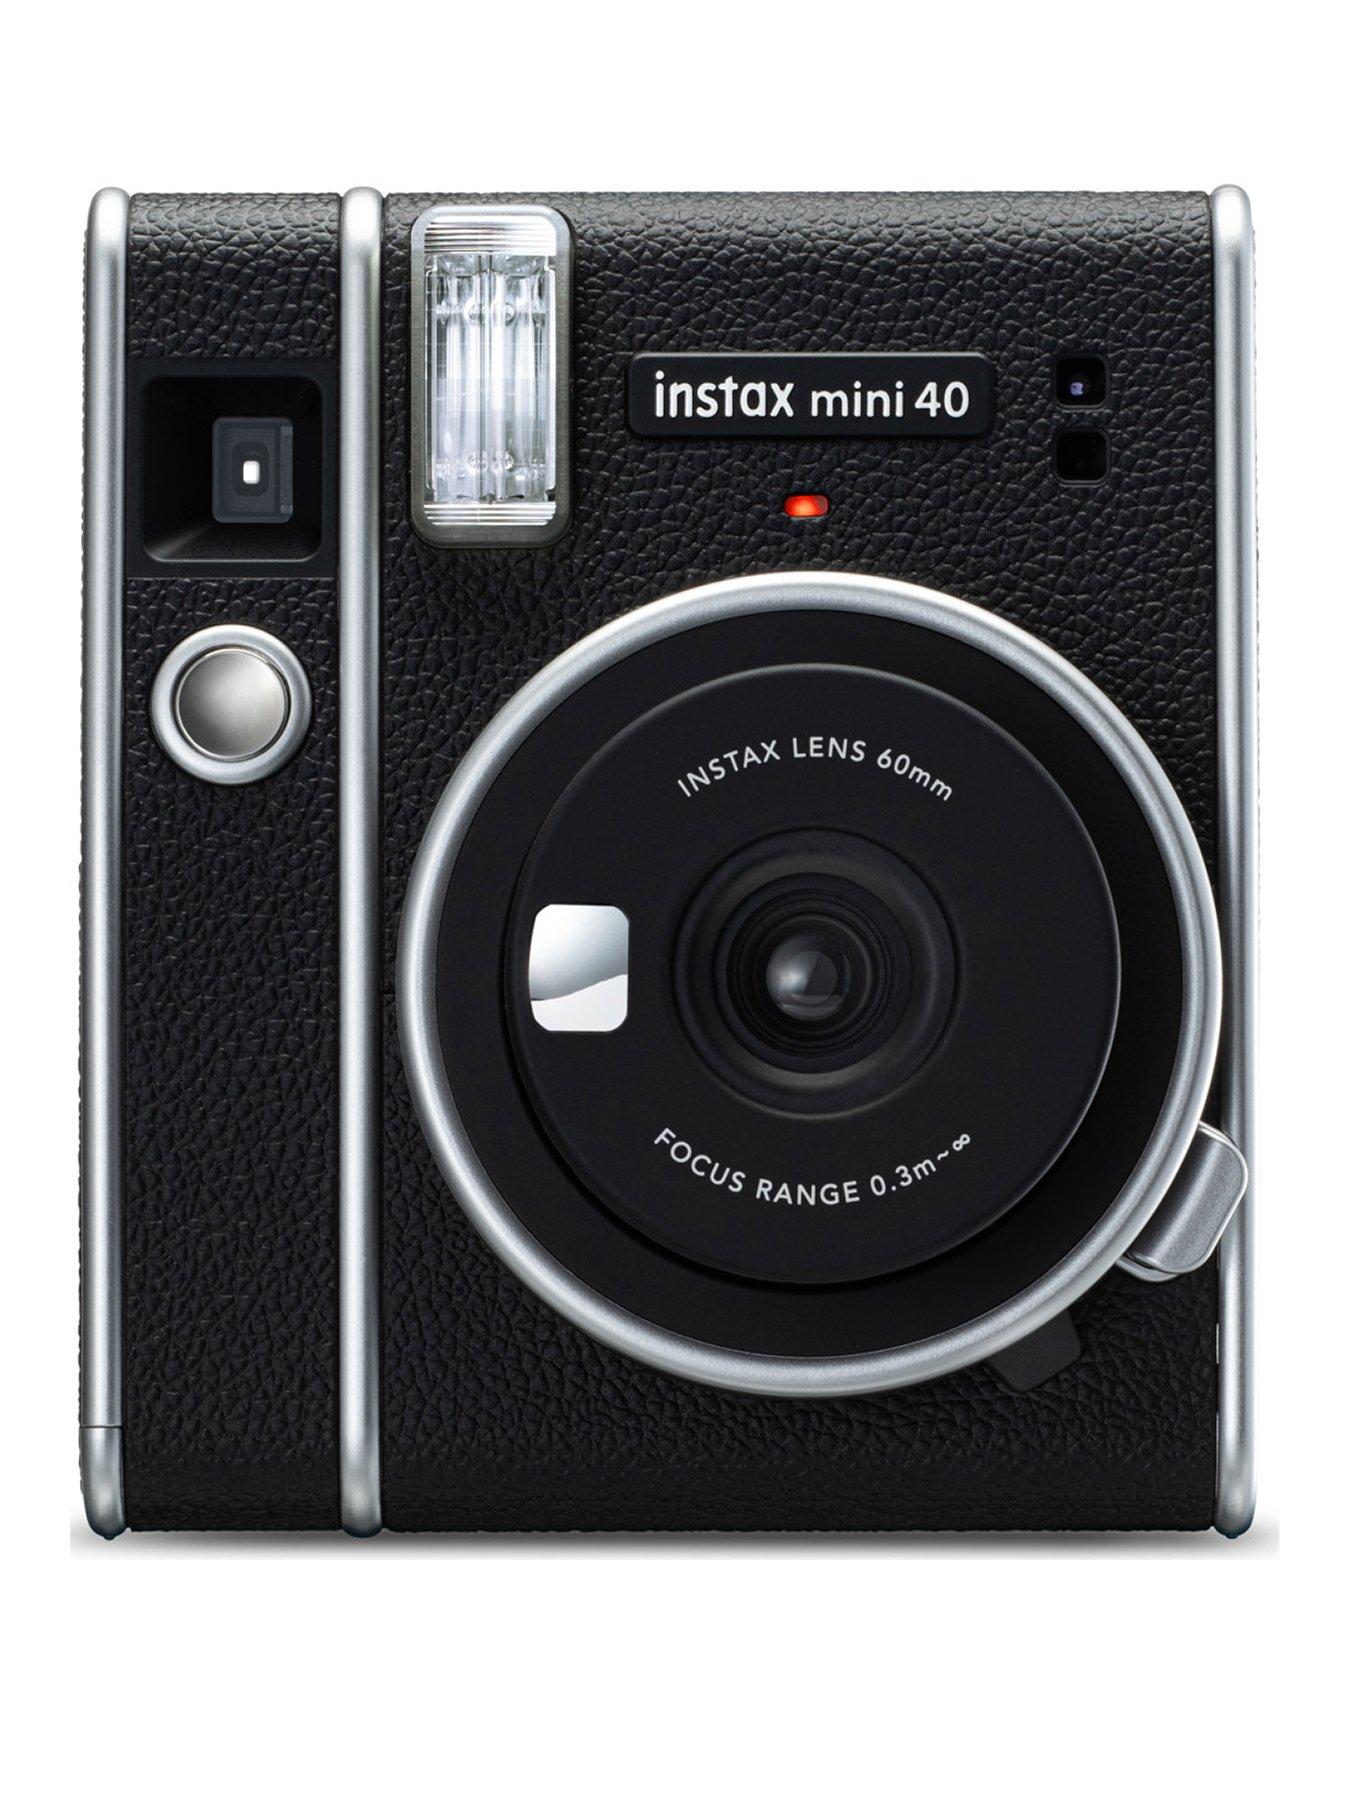 Fujifilm Instax Mini 8 w/10 Exposure Film - White